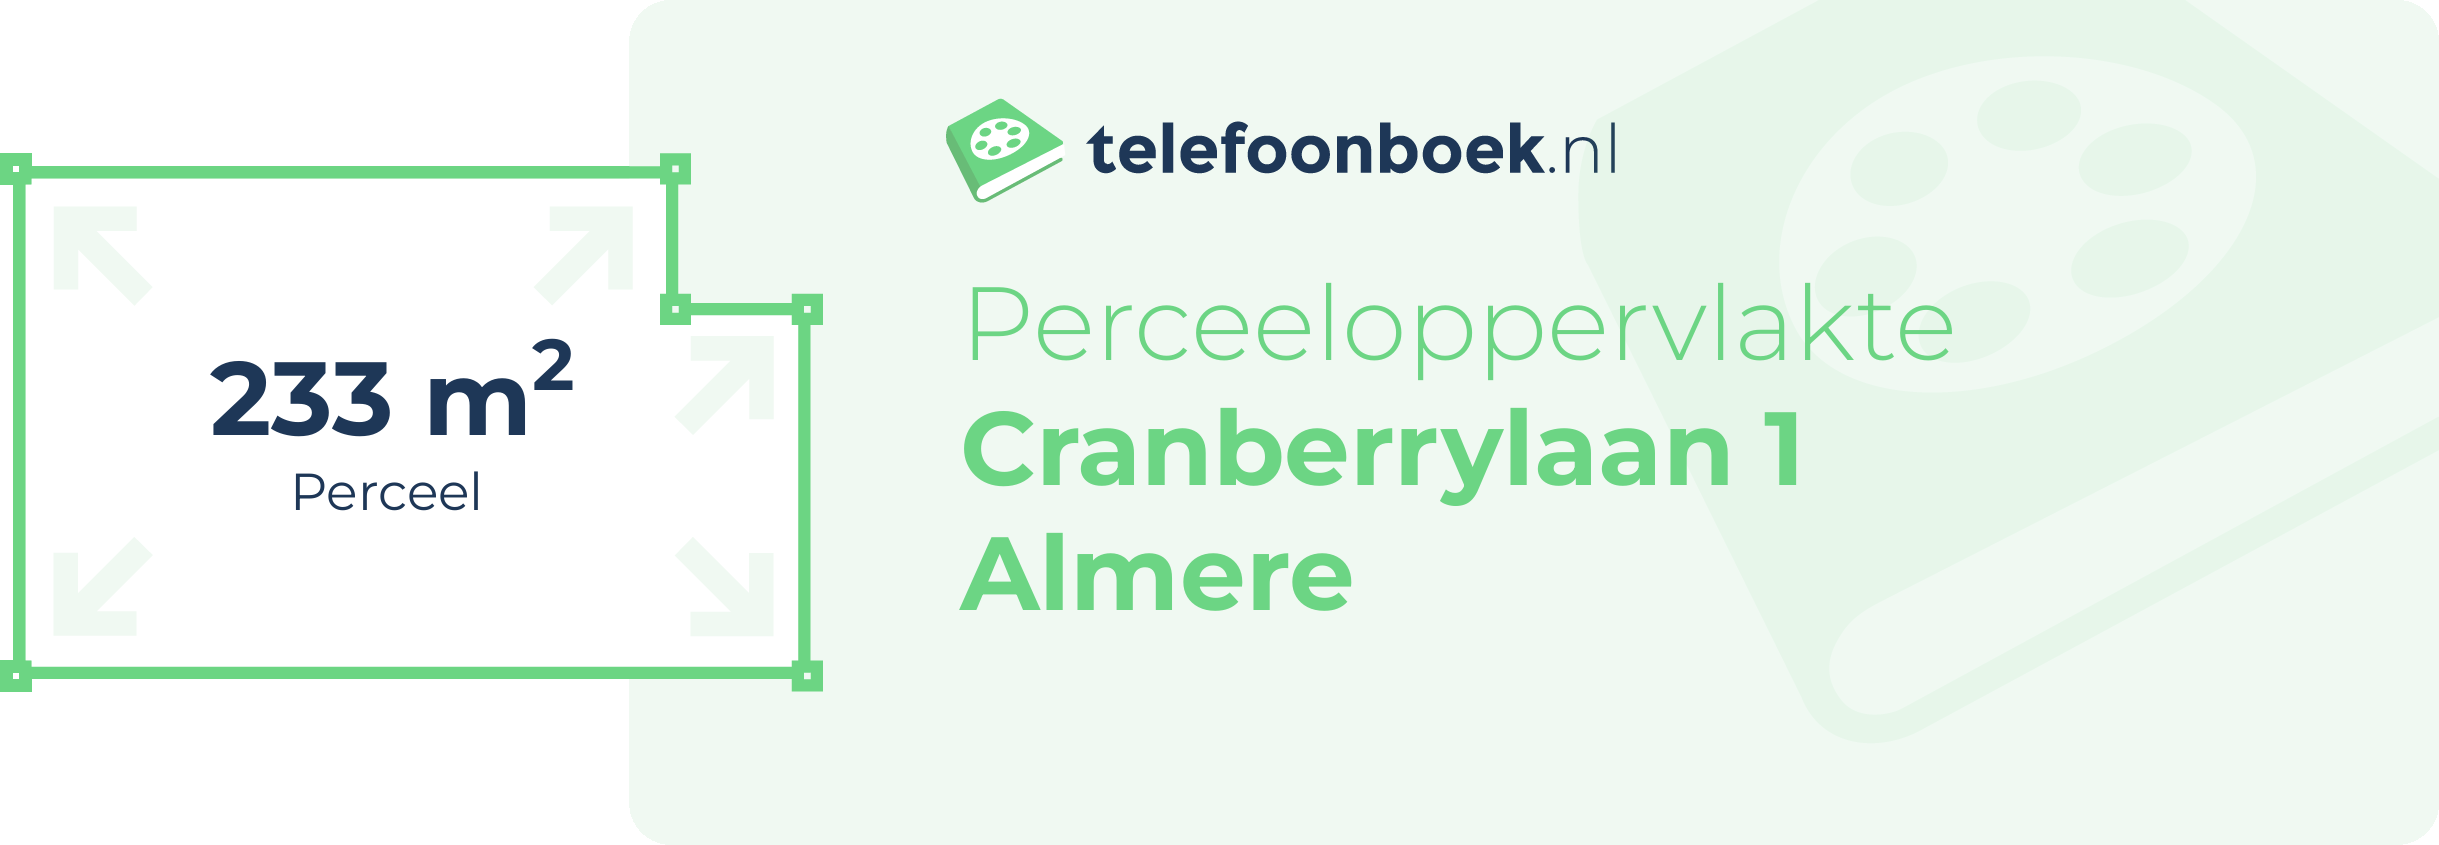 Perceeloppervlakte Cranberrylaan 1 Almere